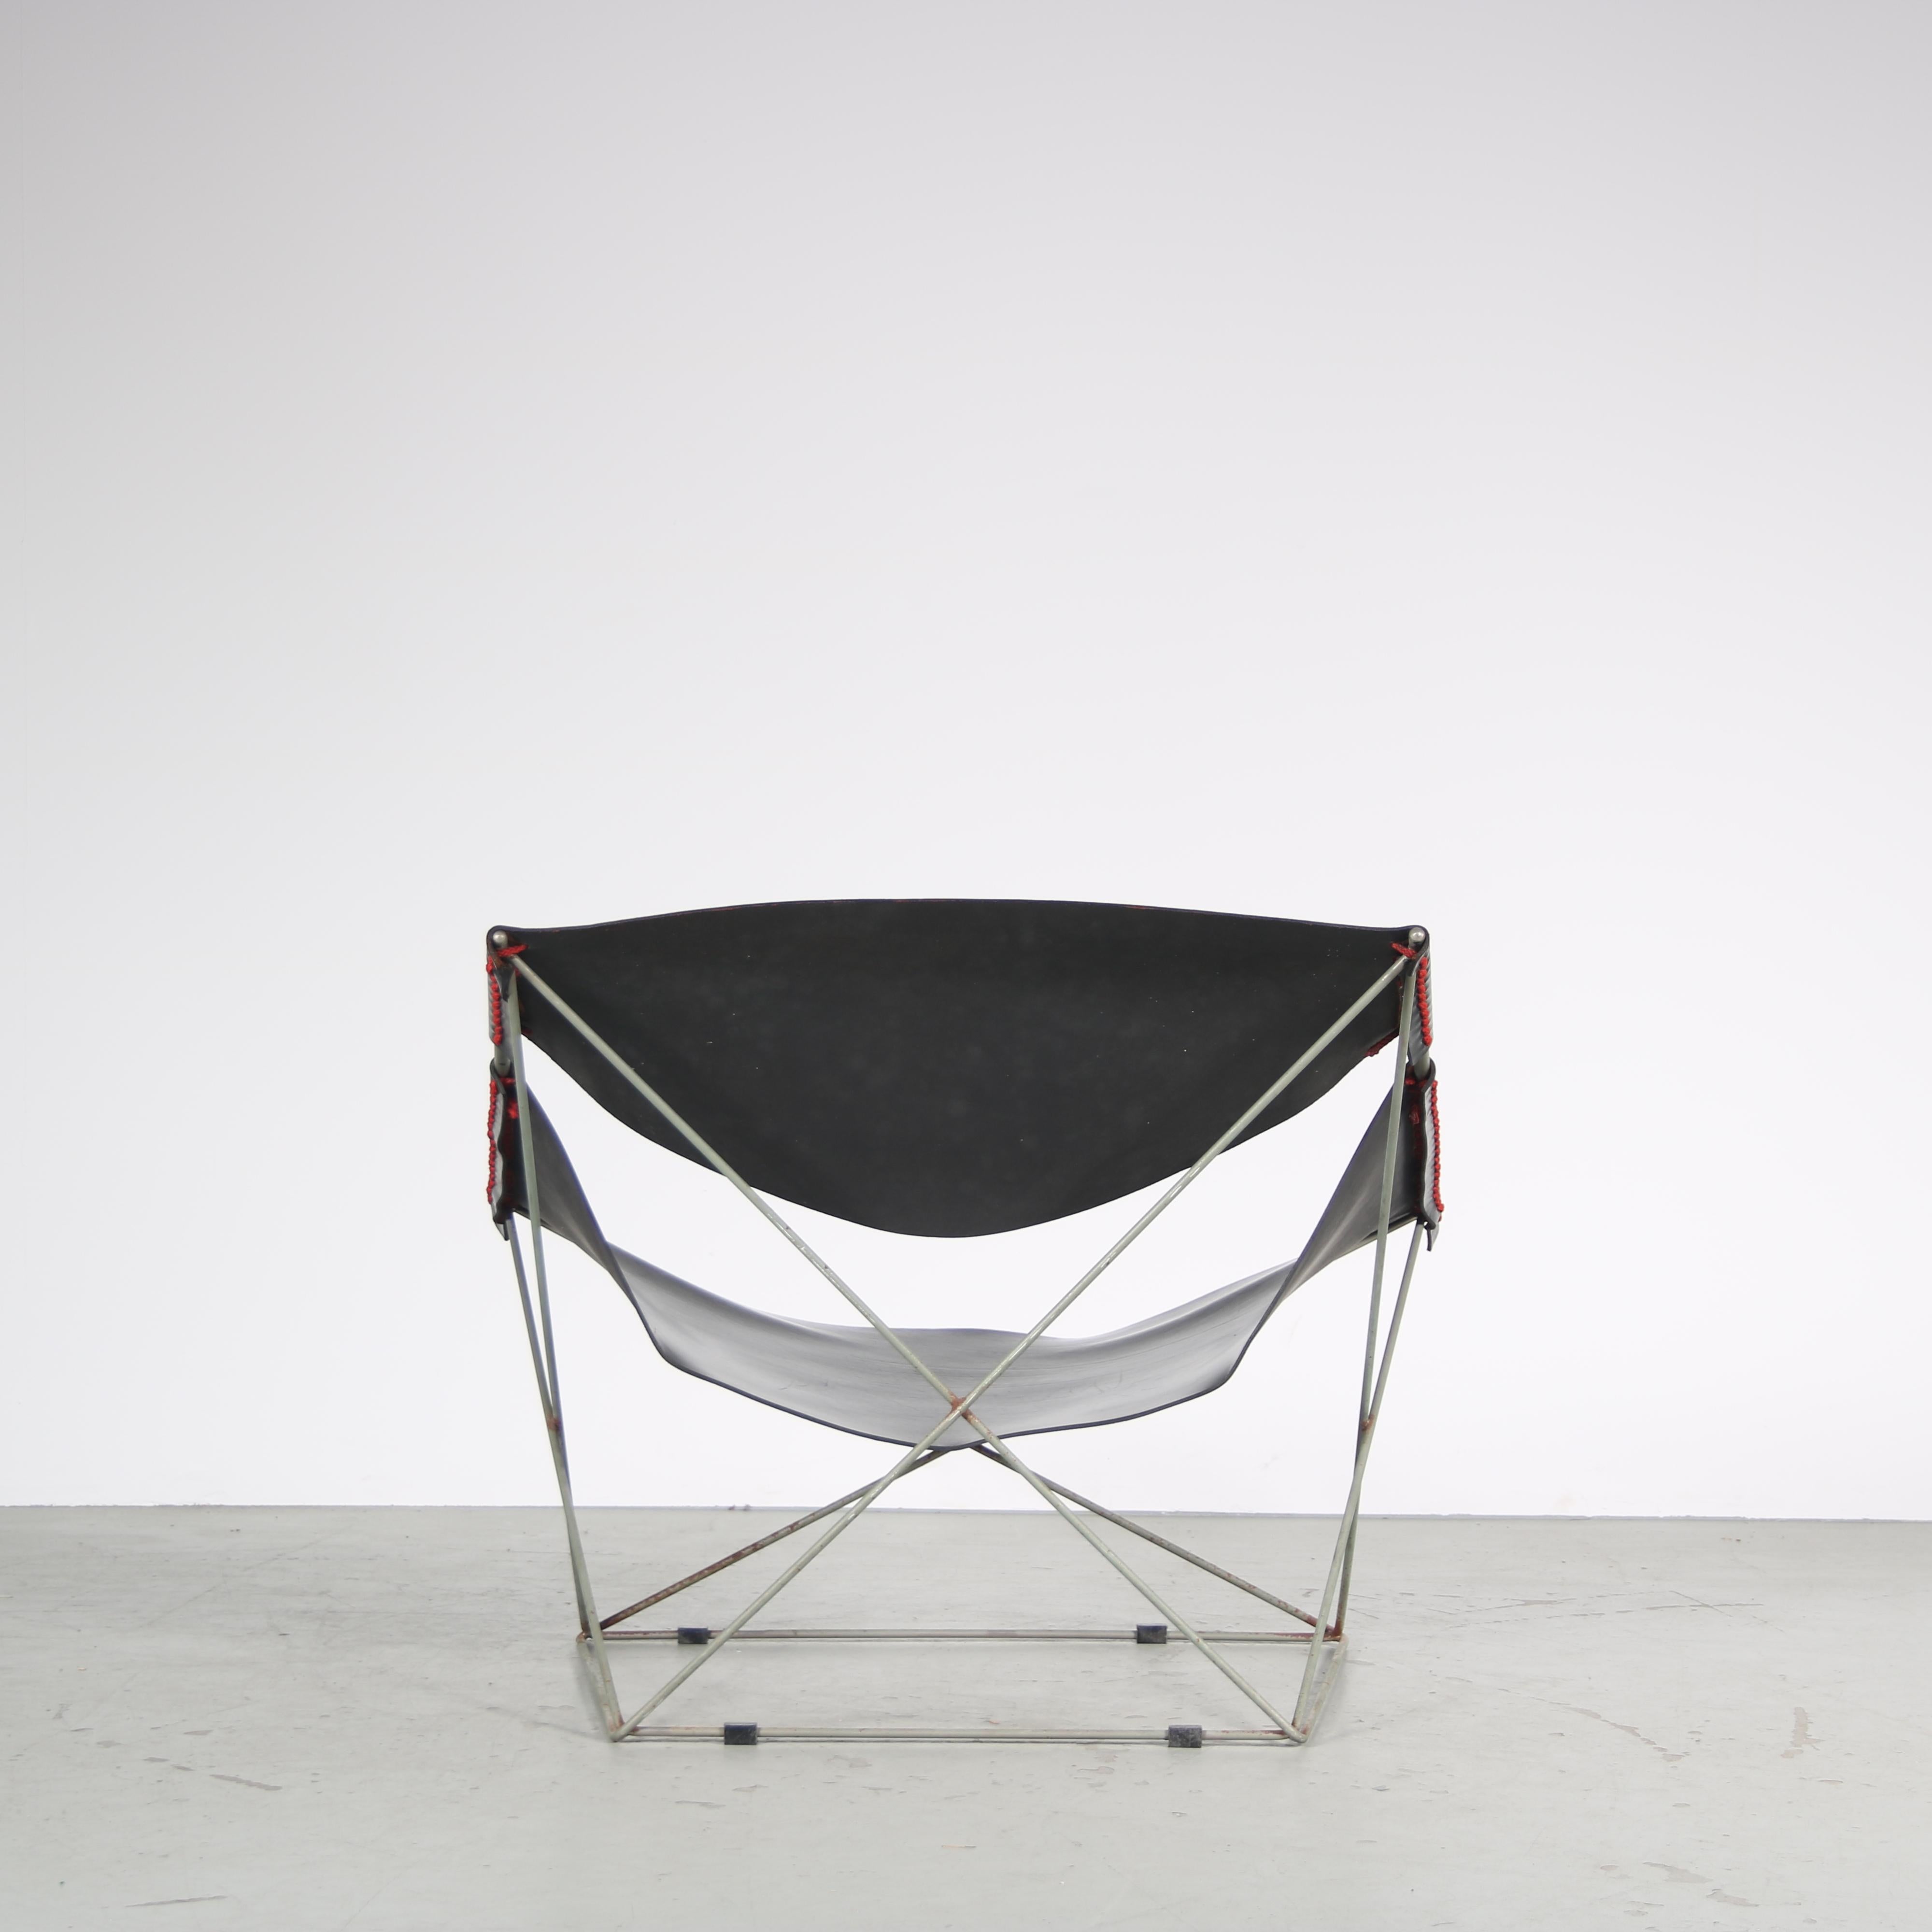 Pierre Paulin F675 “Butterfly” Chair by Artifort, Netherlands 1960 For Sale 2